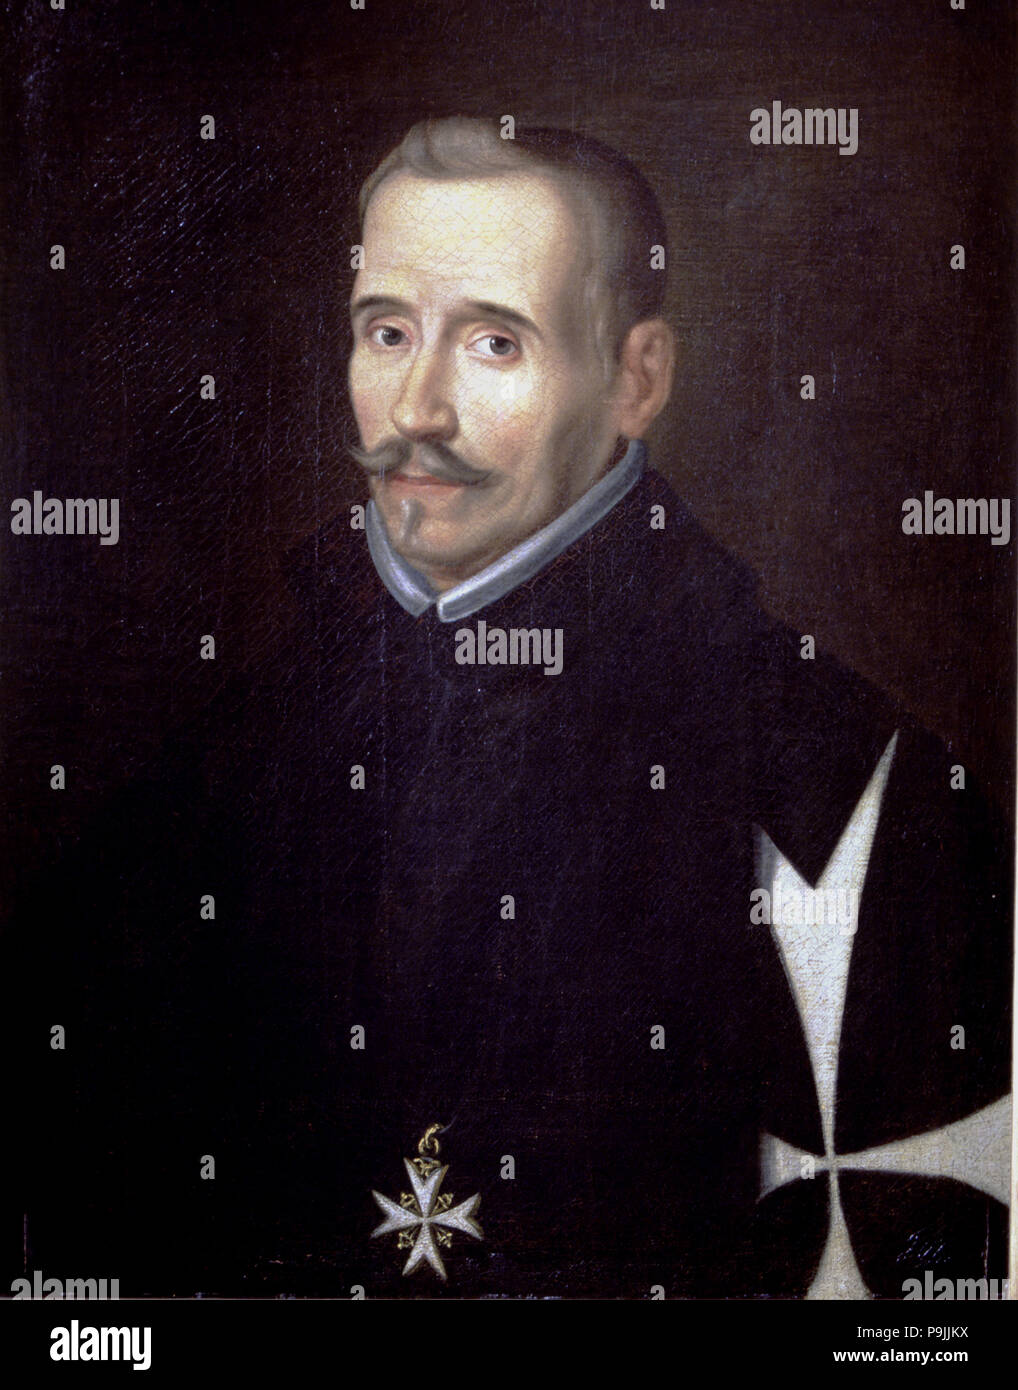 Félix Lope de Vega y Carpio (1562-1635), Spanish writer. Stock Photo